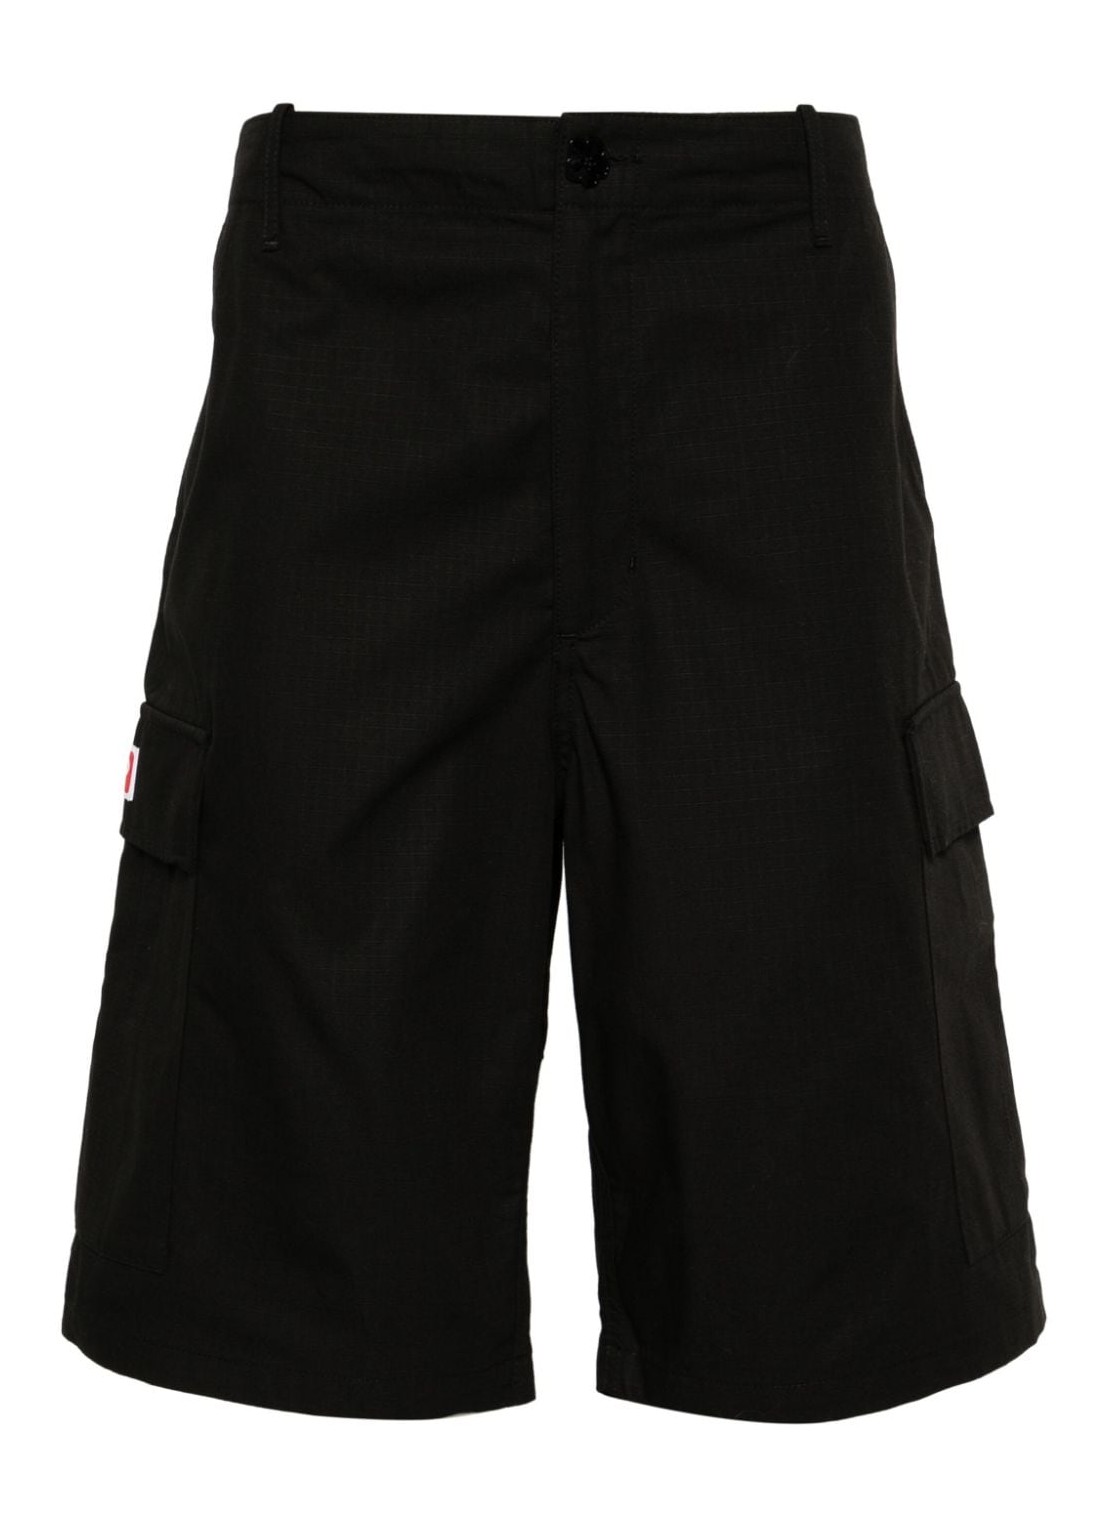 Pantalon corto kenzo short pant man cargo workwear short fe55sh2359dl 99 talla M
 